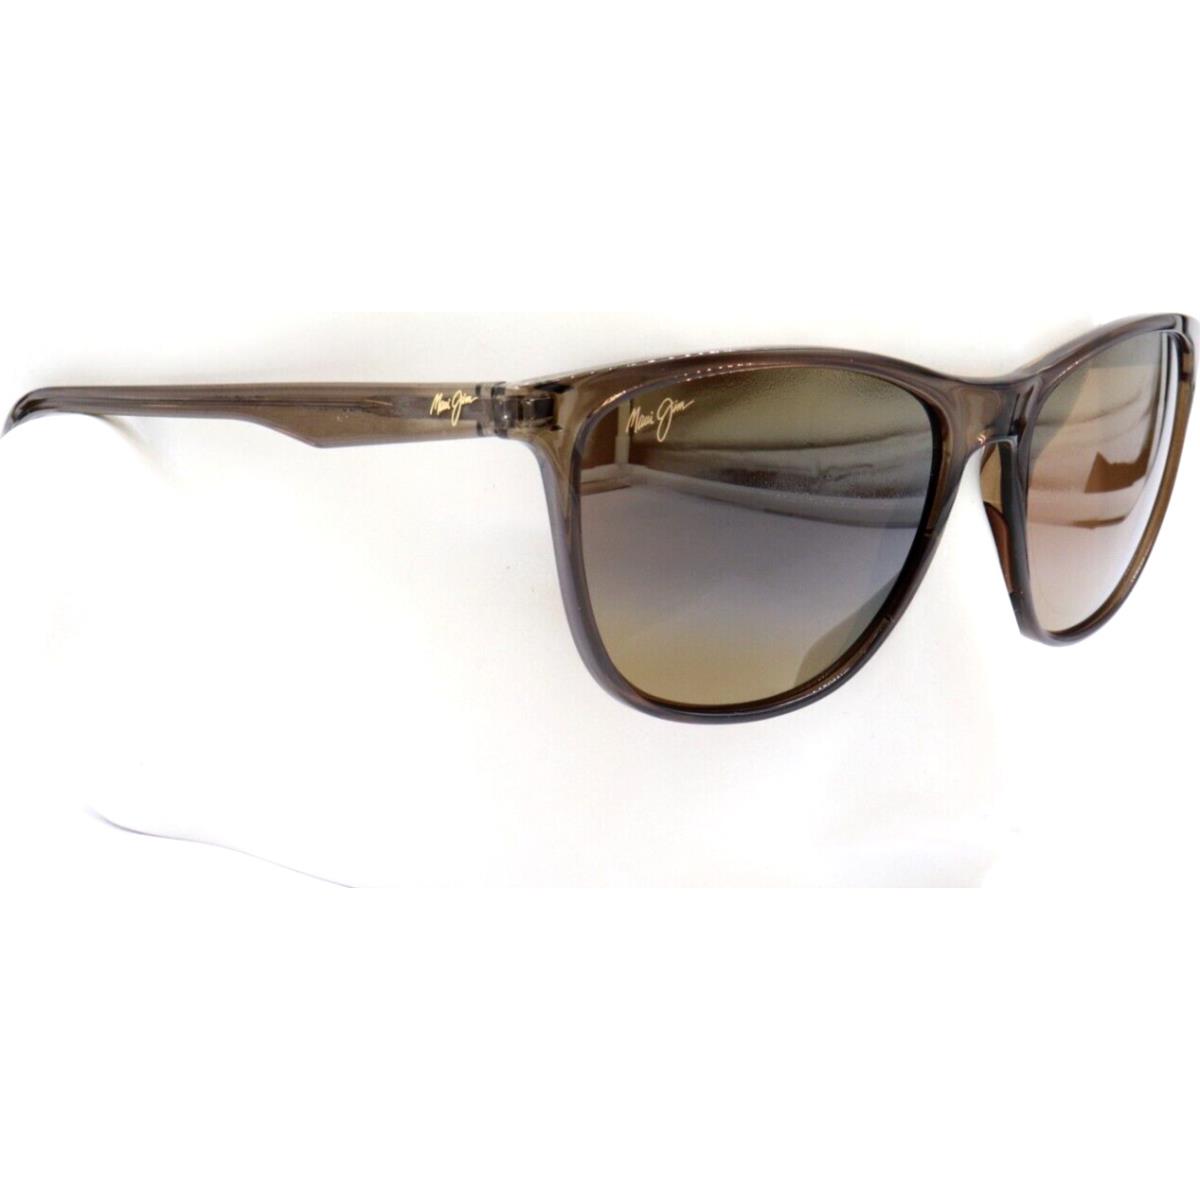 Maui Jim Sugar Cane Mocha Hcl Bronze Polarized Sunglasses H783-24C